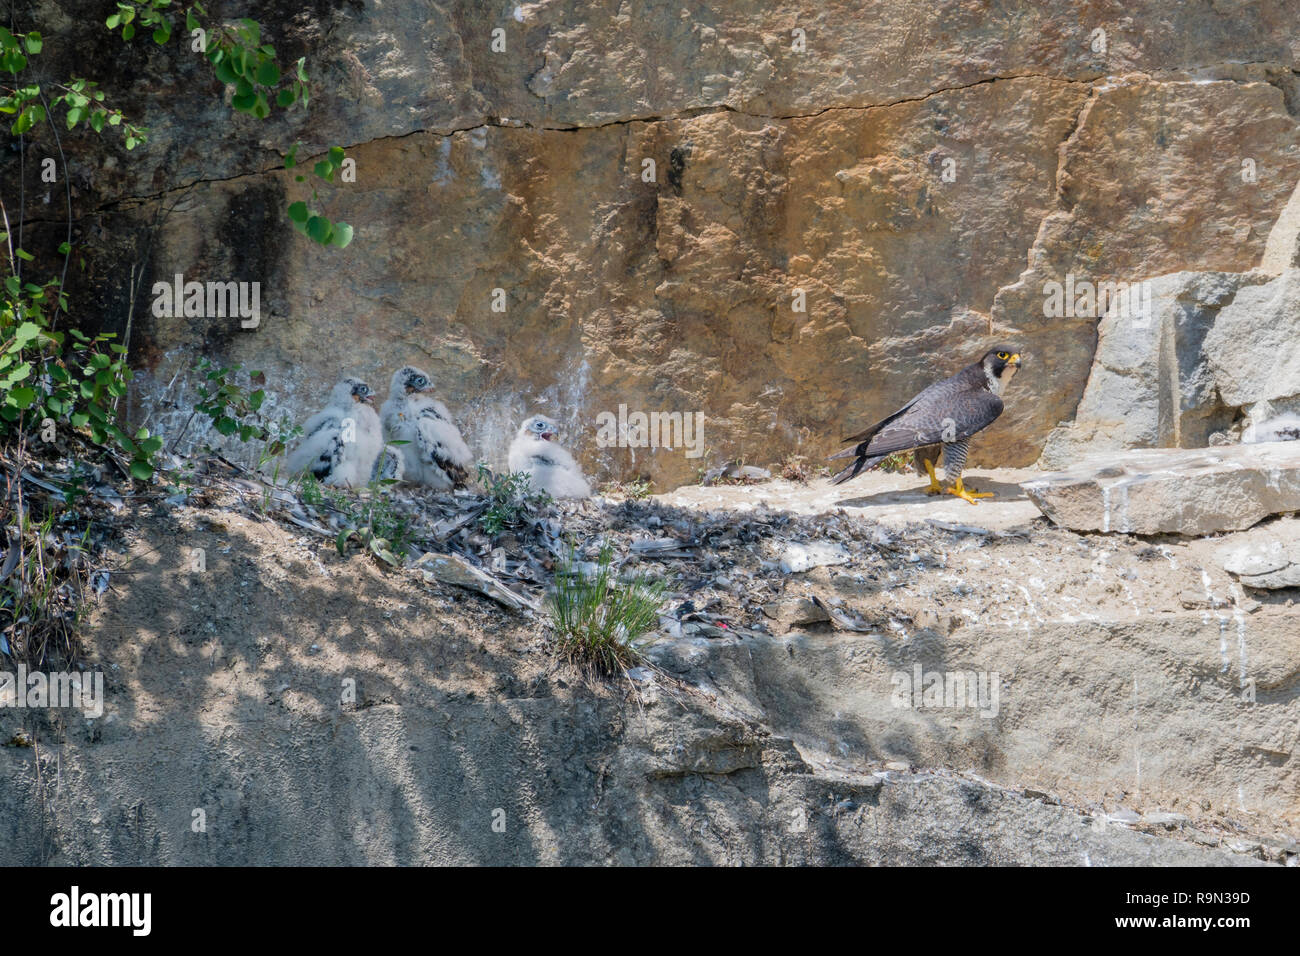 En Steilwand Wanderfalke Brut, Falco peregrinus, halcón peregrino que anidan en el headwall Foto de stock